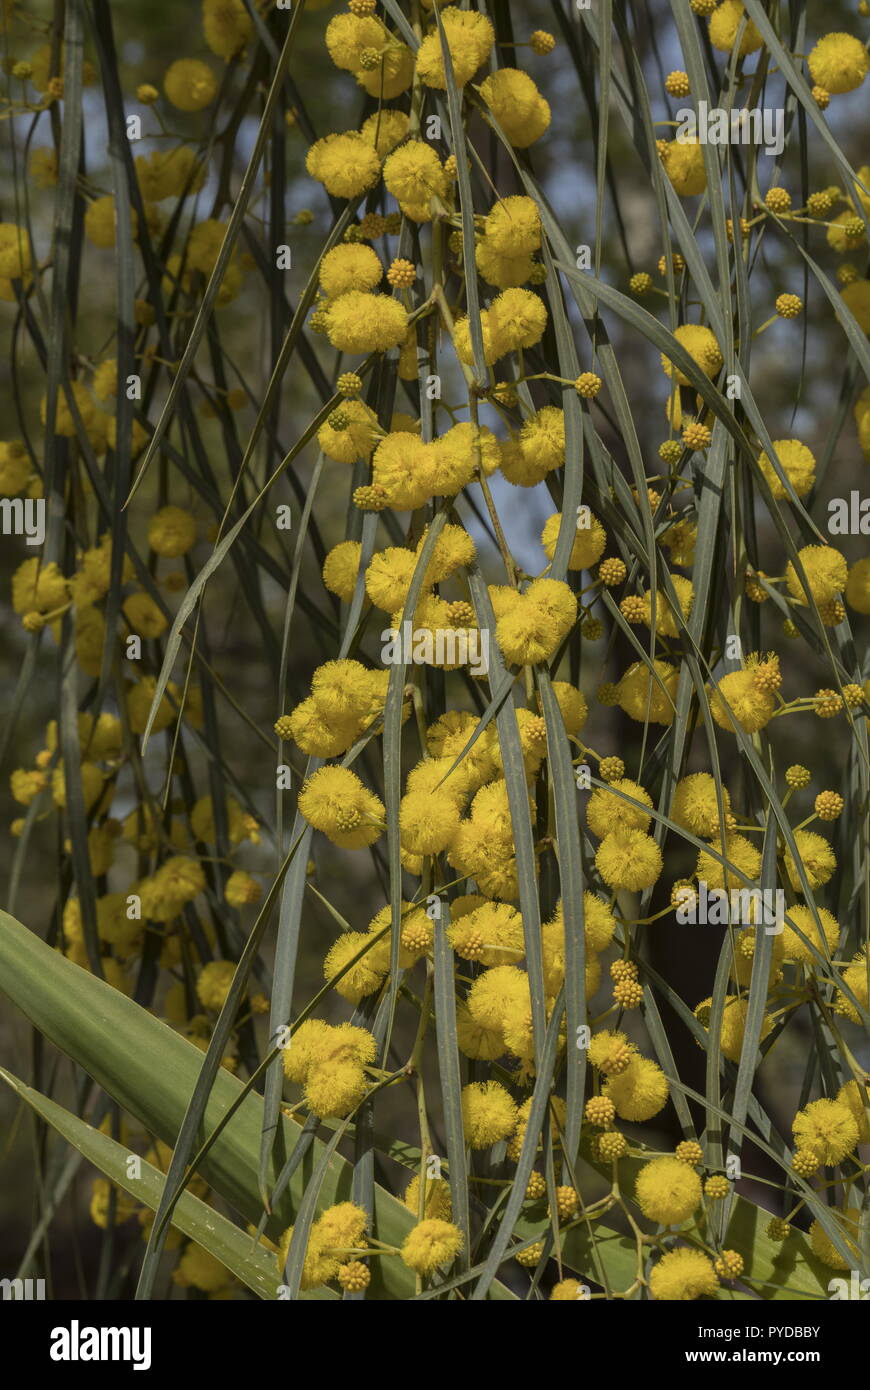 Coojong or Golden wreath wattle, Acacia saligna in full flower. Stock Photo